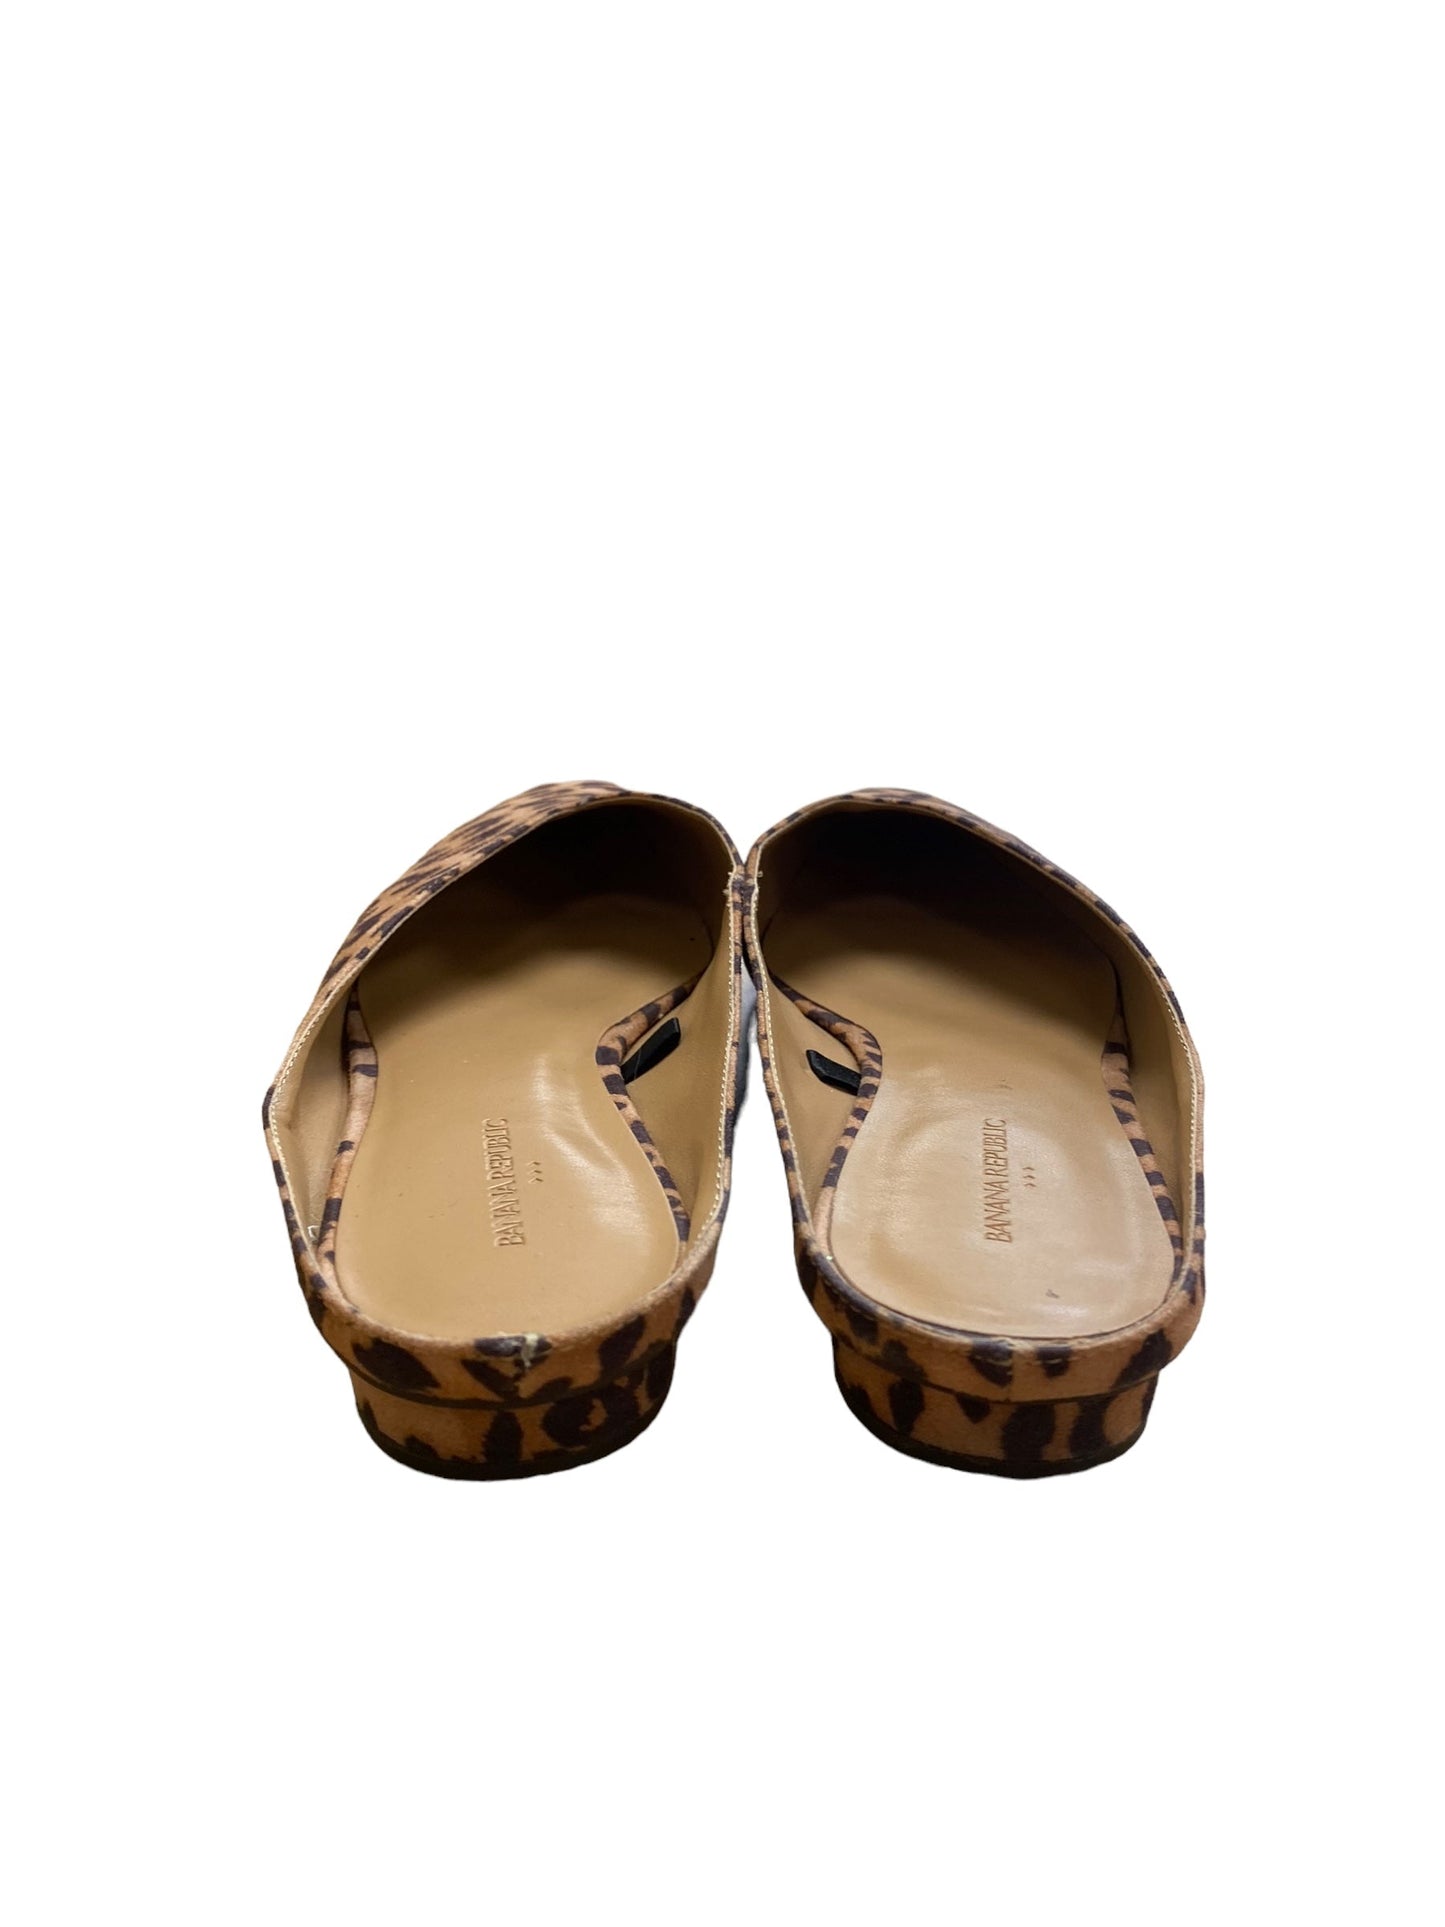 Animal Print Shoes Flats Banana Republic, Size 8.5